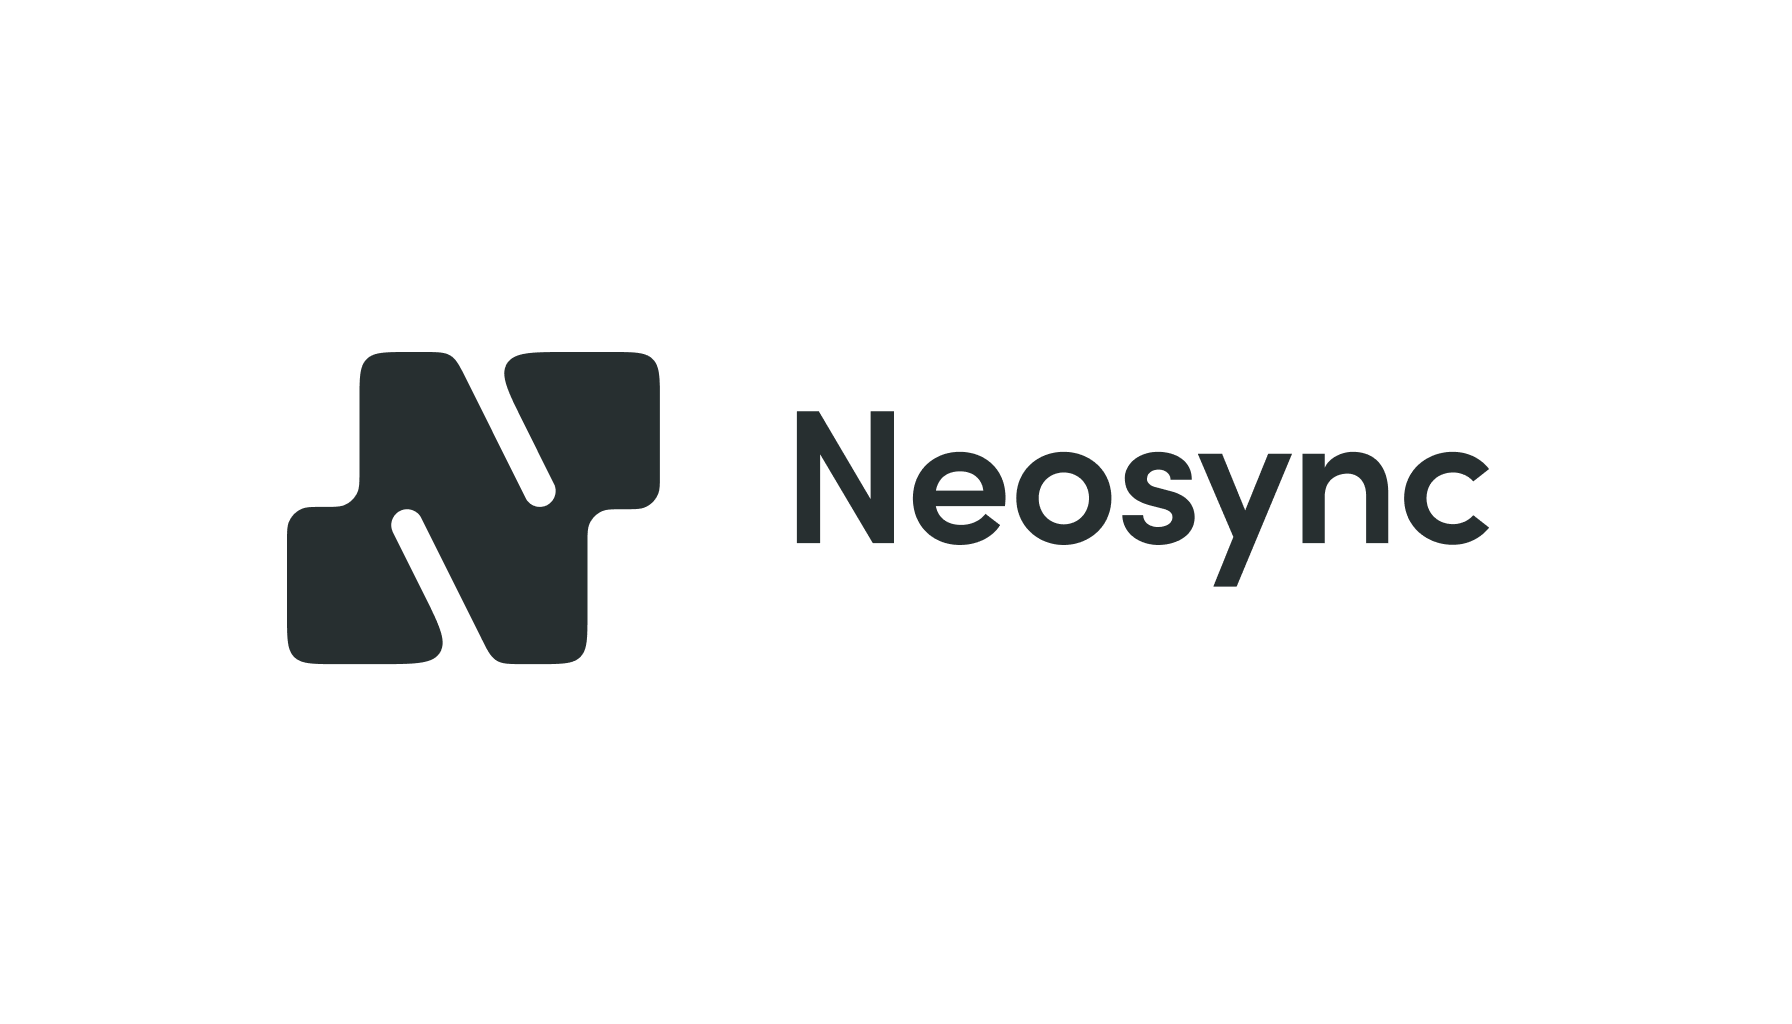 Introducing Neosync